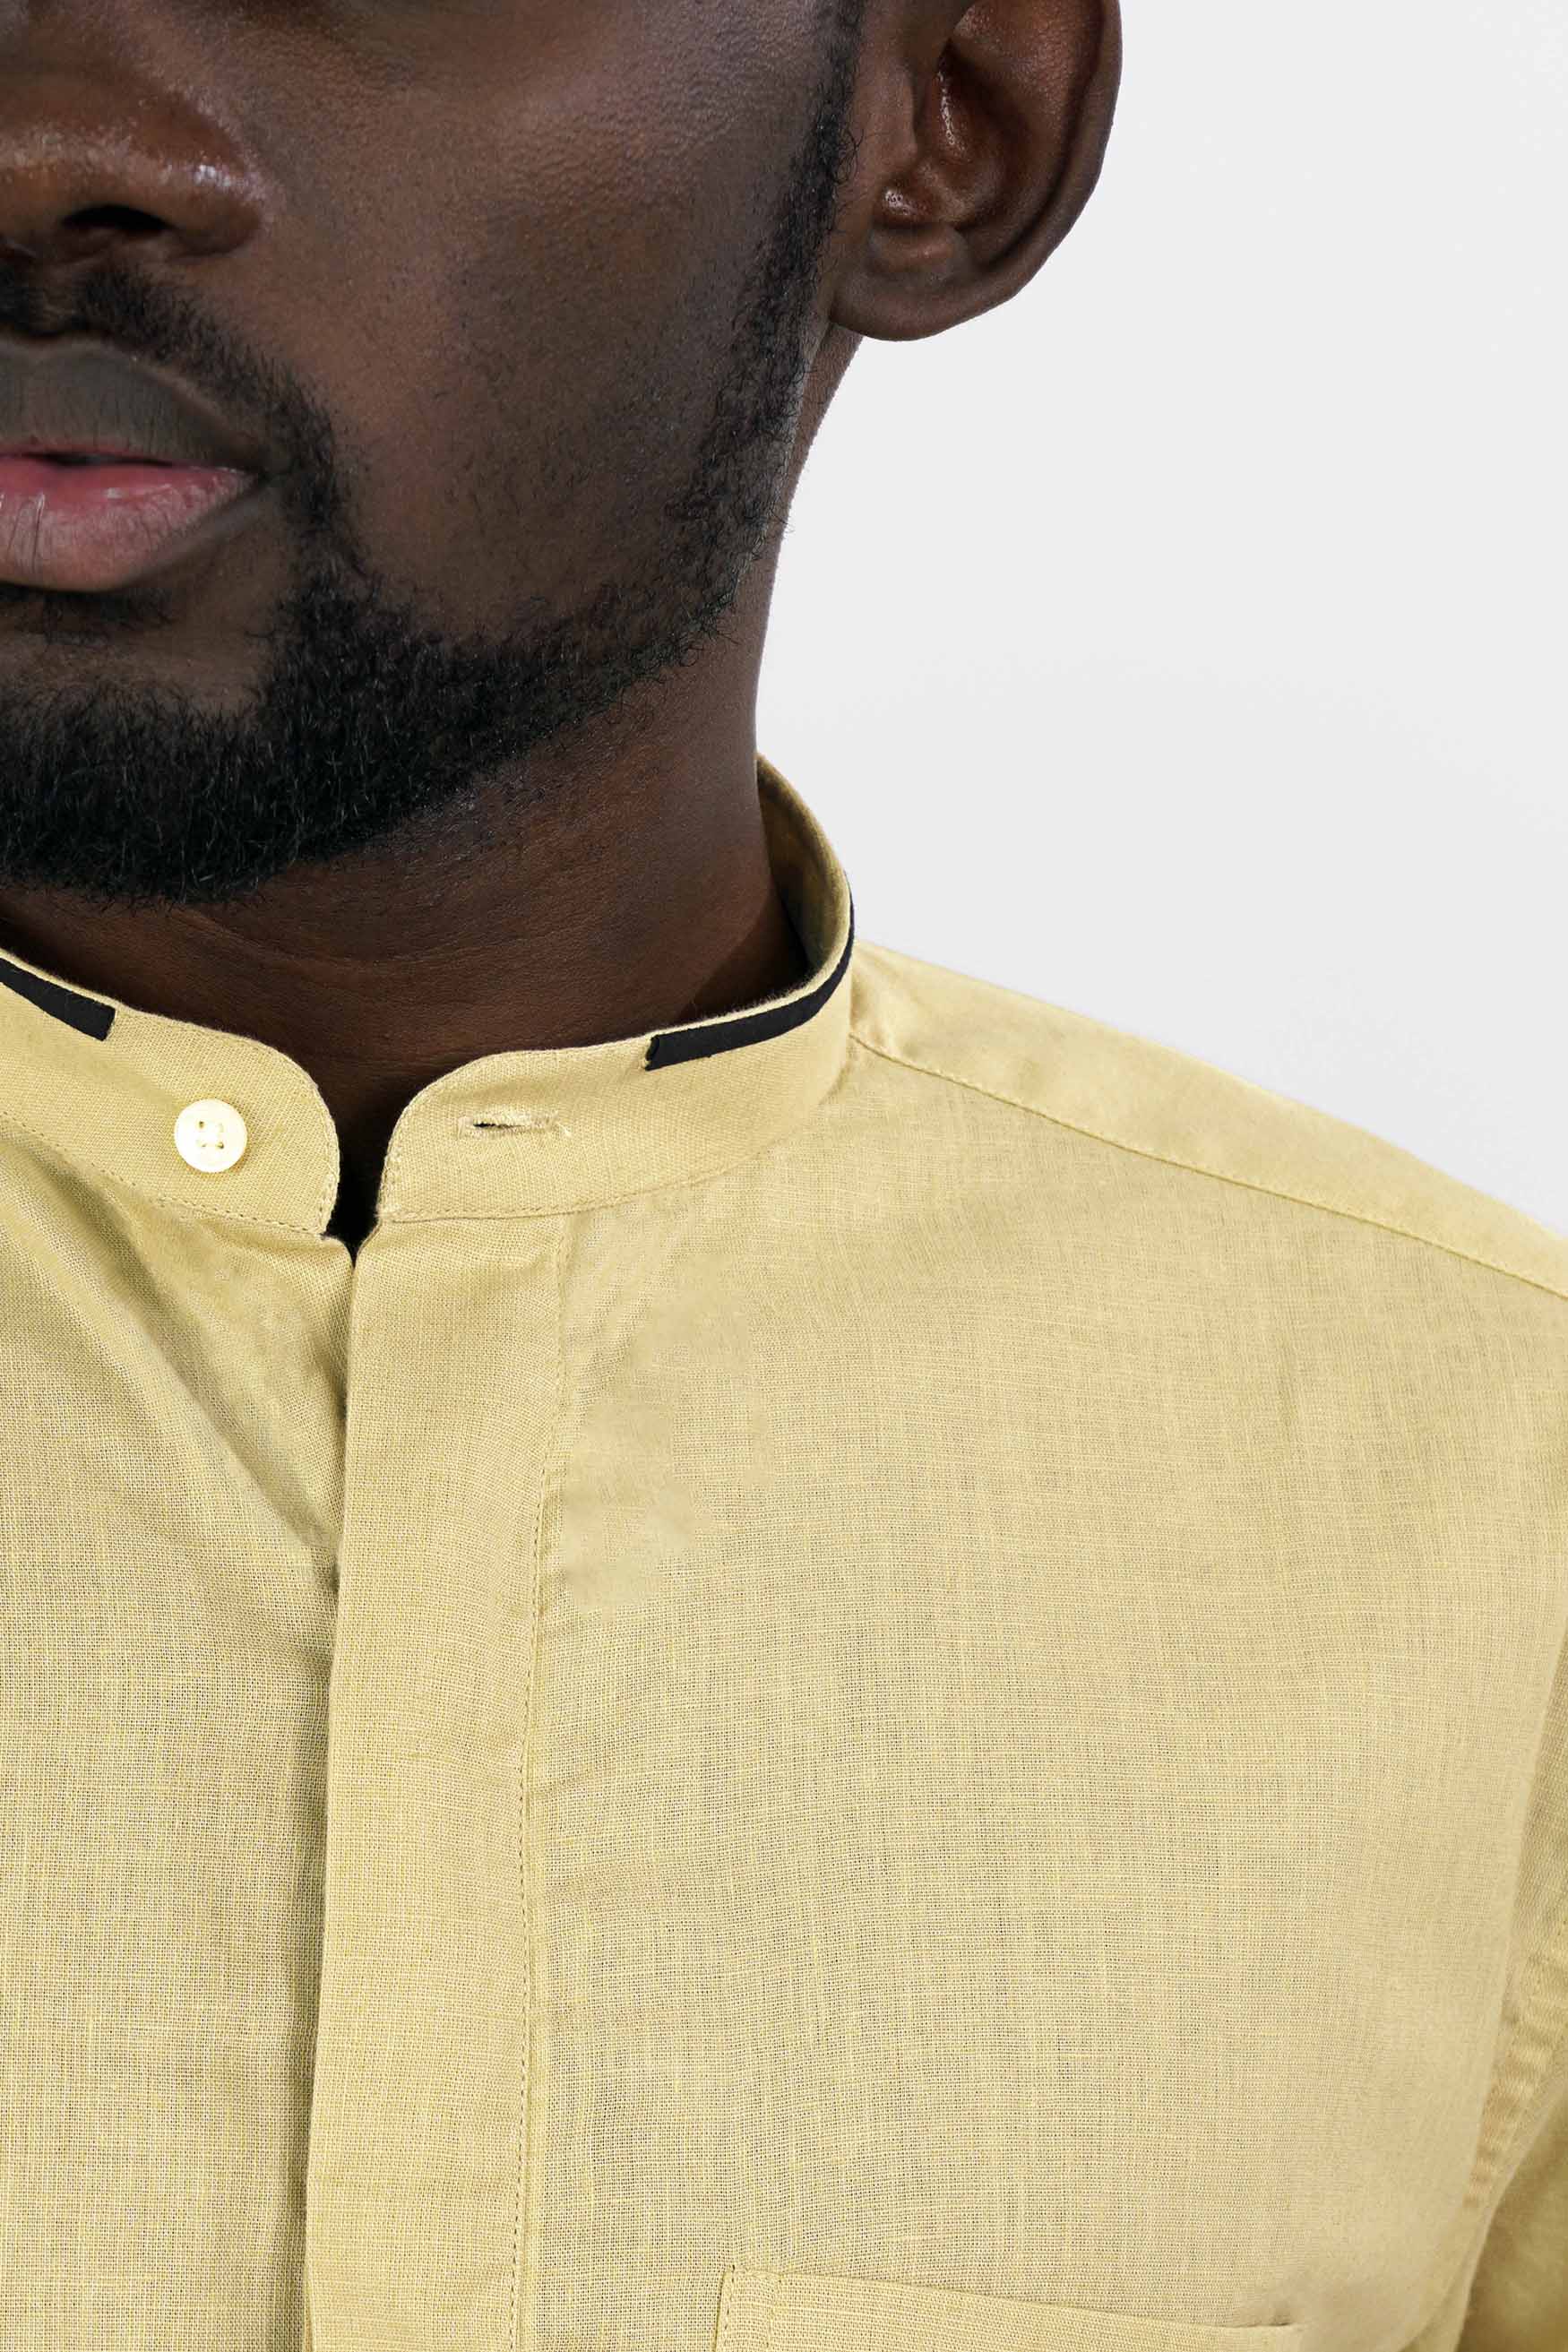 Harvest Brown Hand Painted Luxurious Linen Designer Shirt